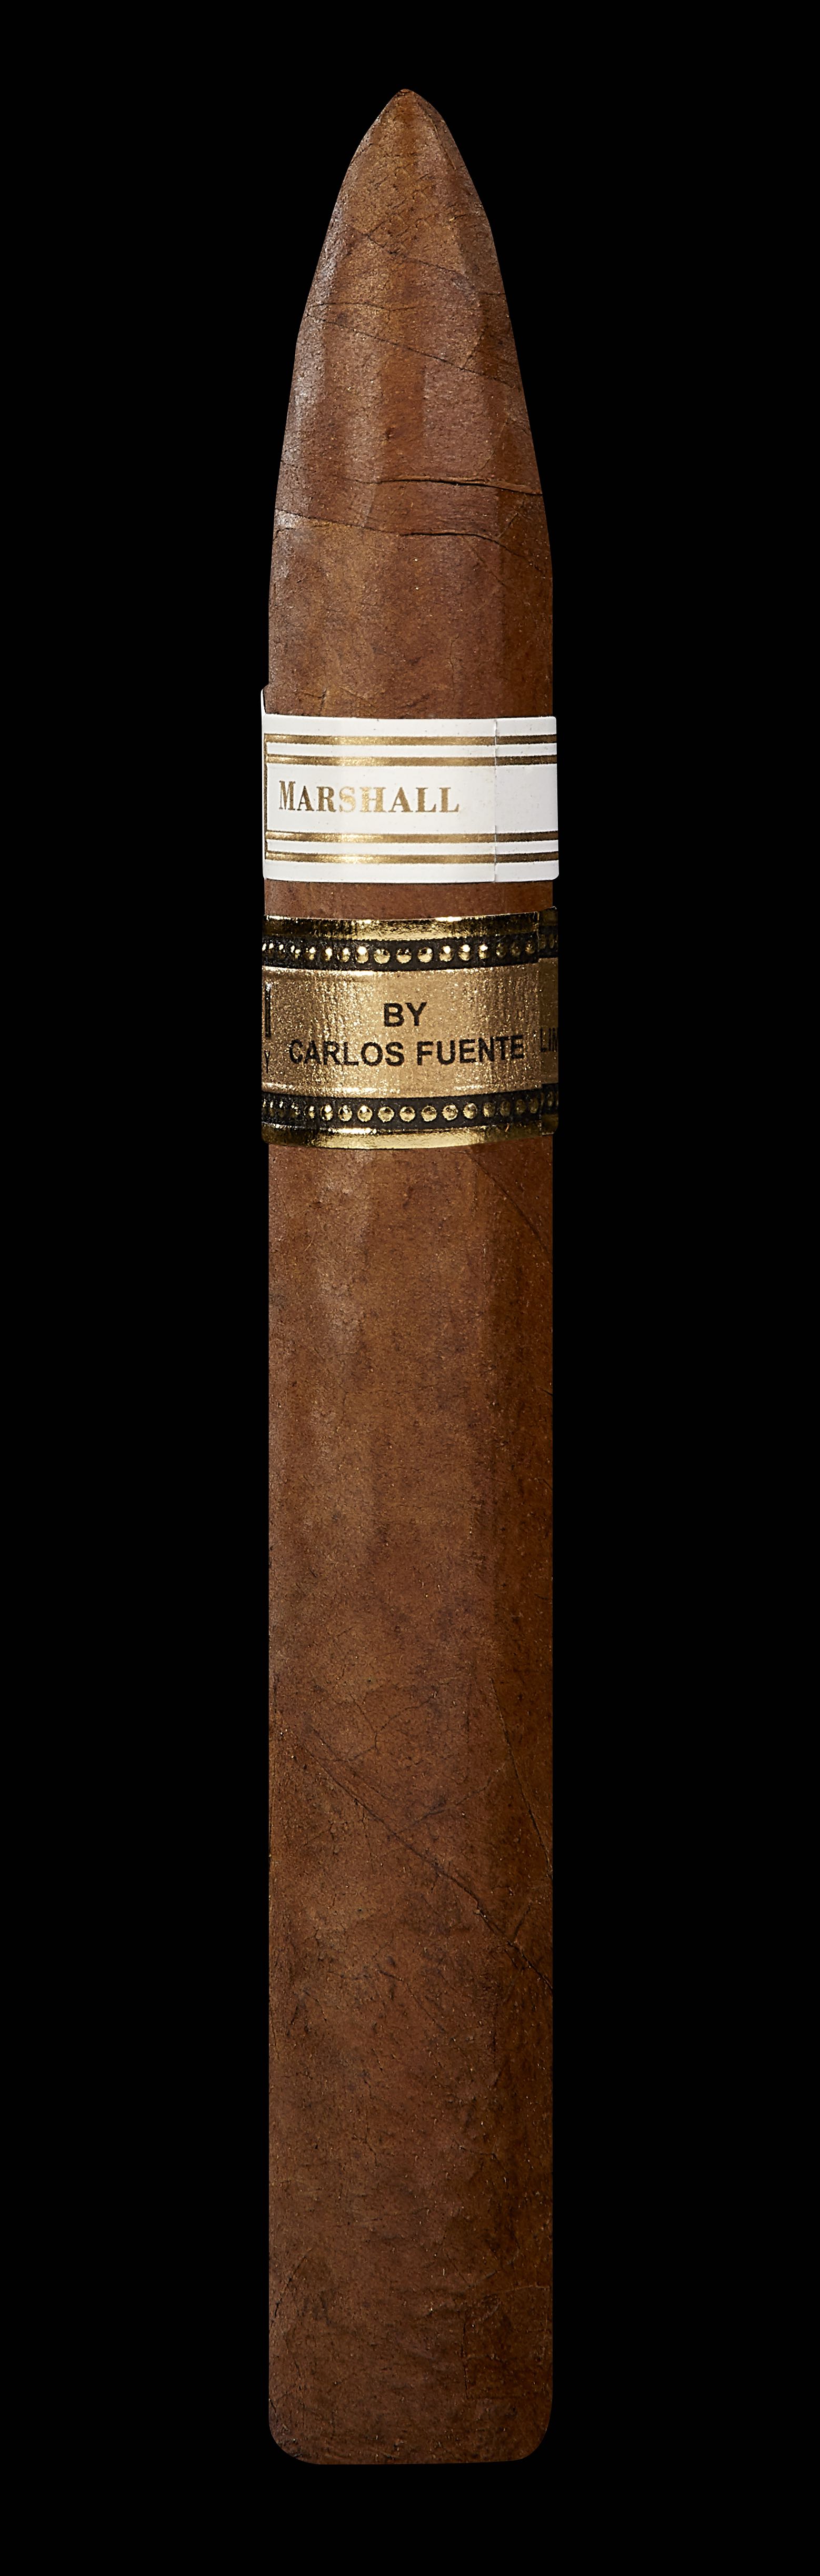 DM Fuente 38th XXXVIII Anniversary Cigar right side Credit Barone